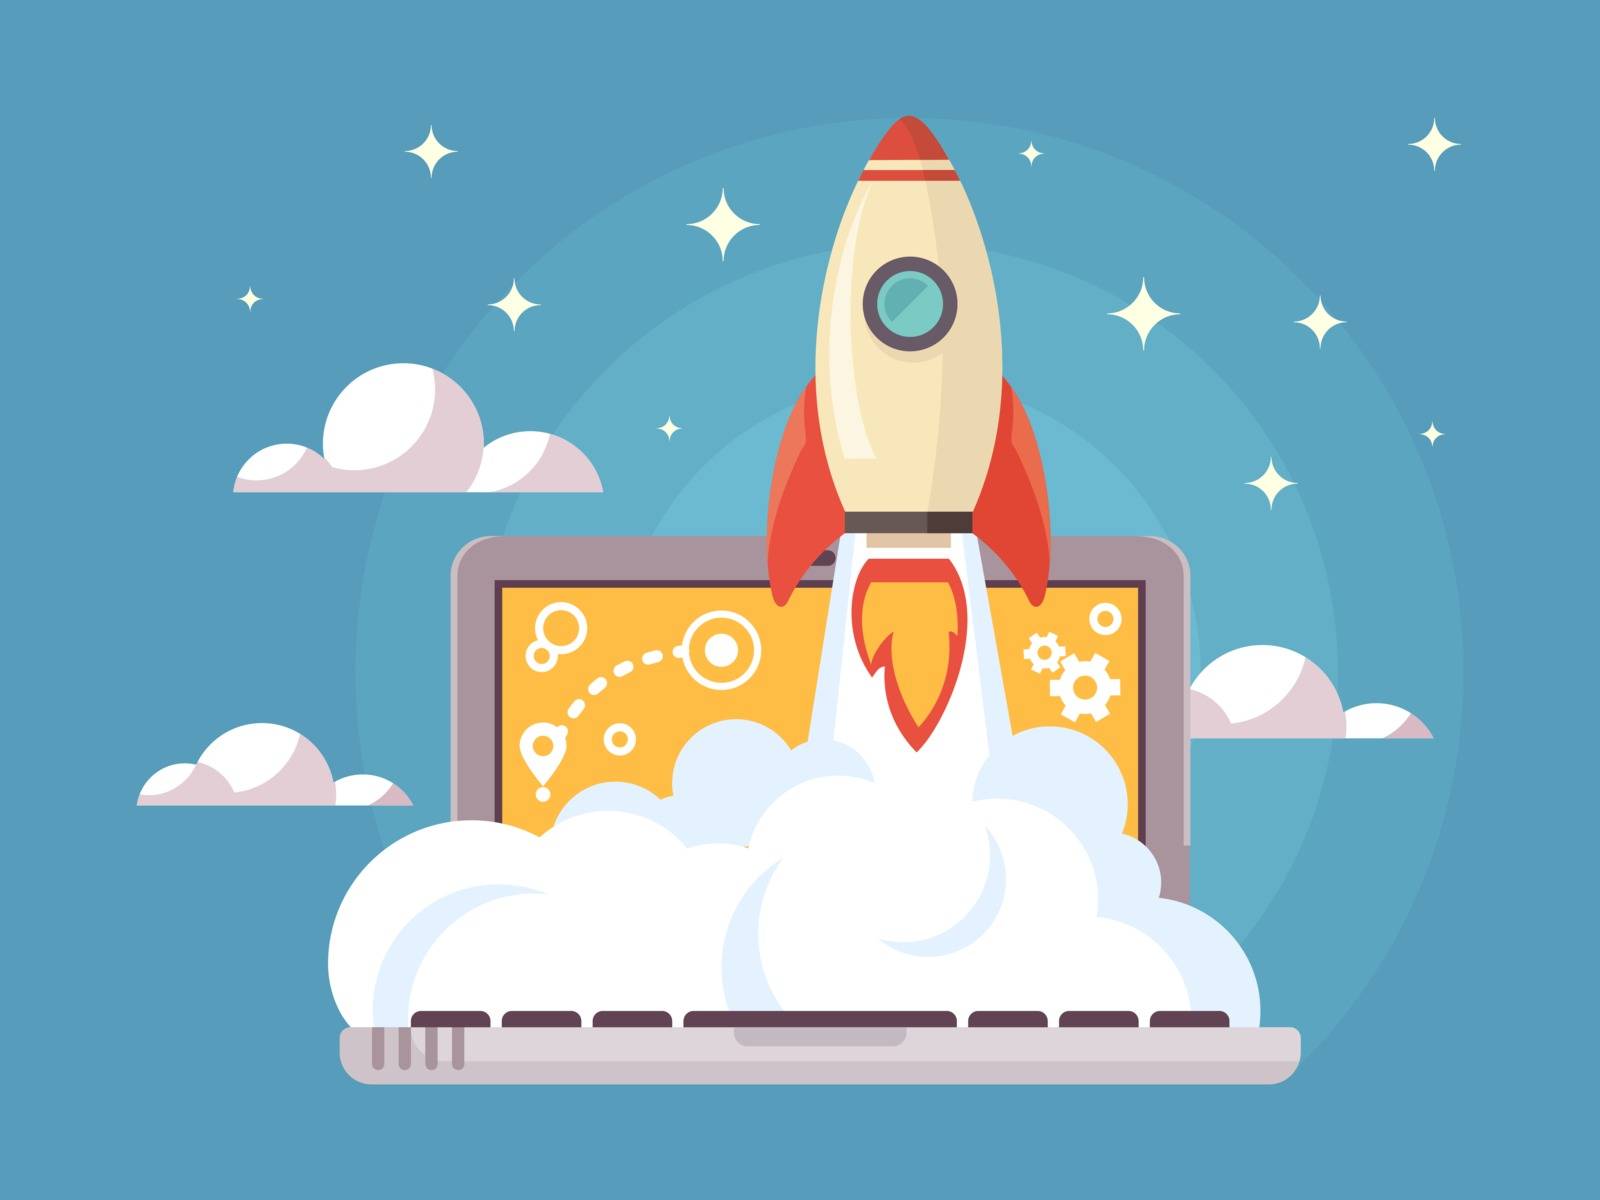 Web start up flat style. Rocket flight, promotion seo, laptop and launch, vector illustration